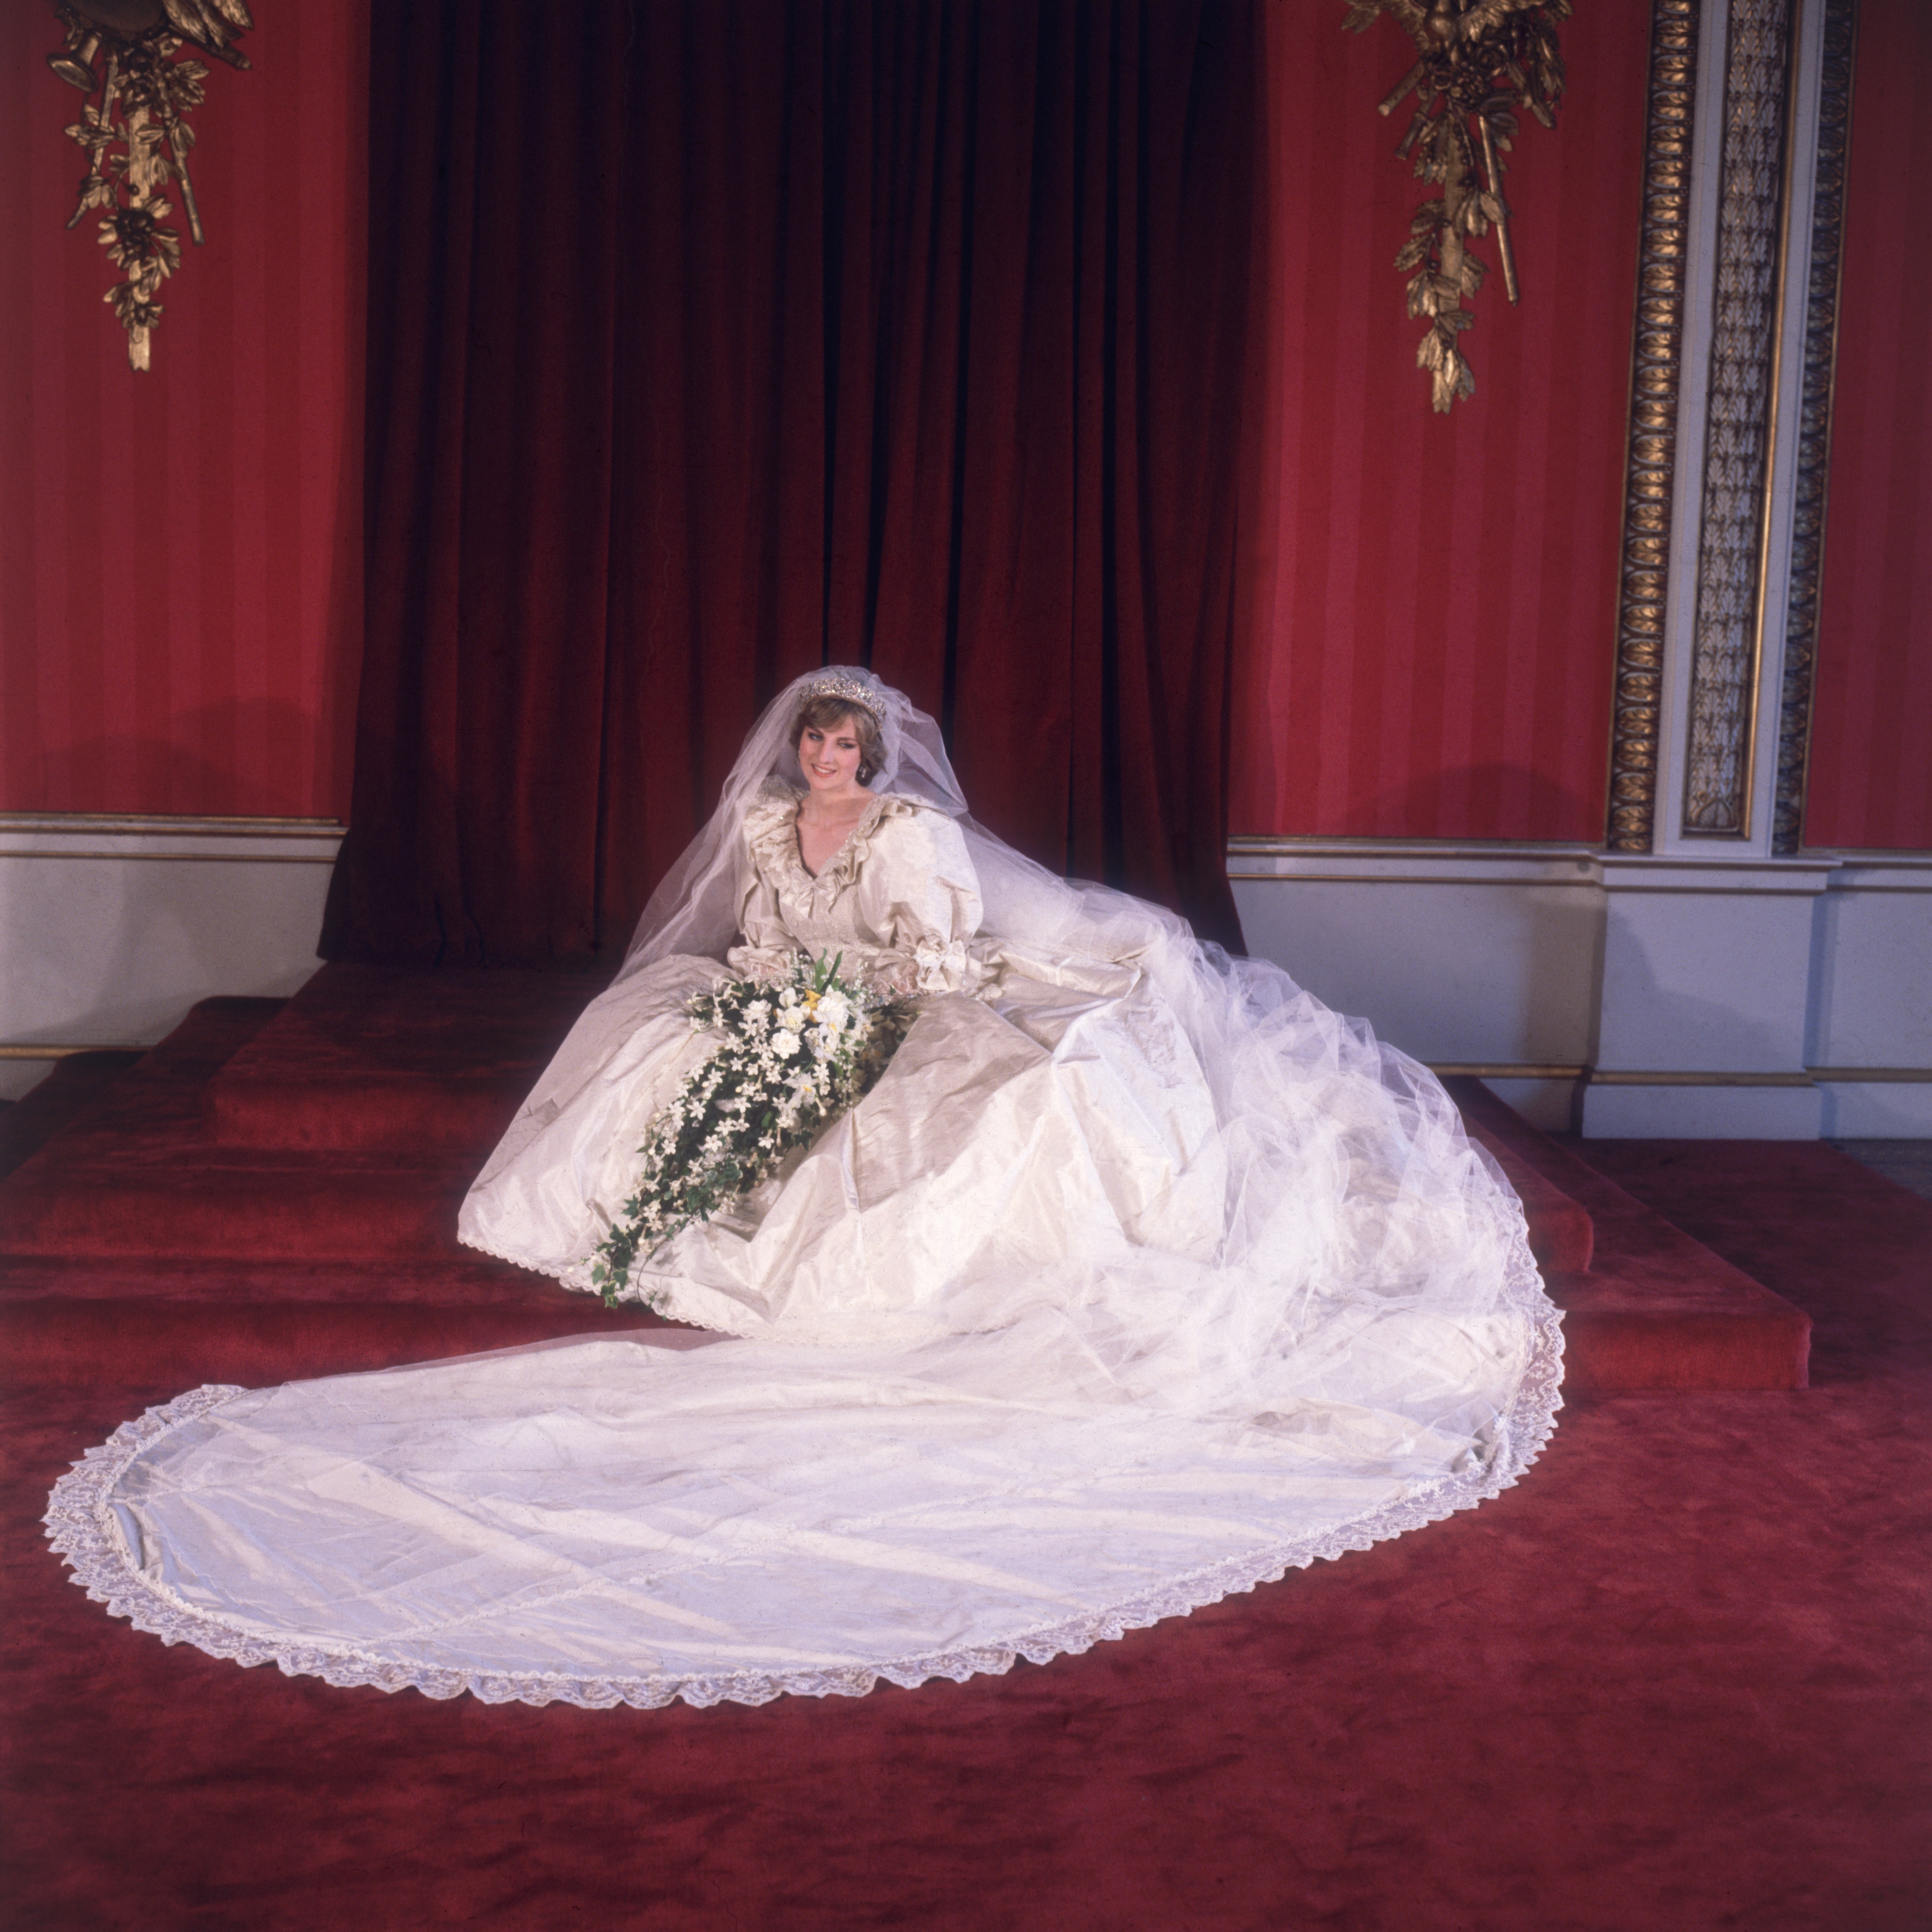 Princess Diana Had Two Bouquets at Her Royal Wedding | Closer Weekly